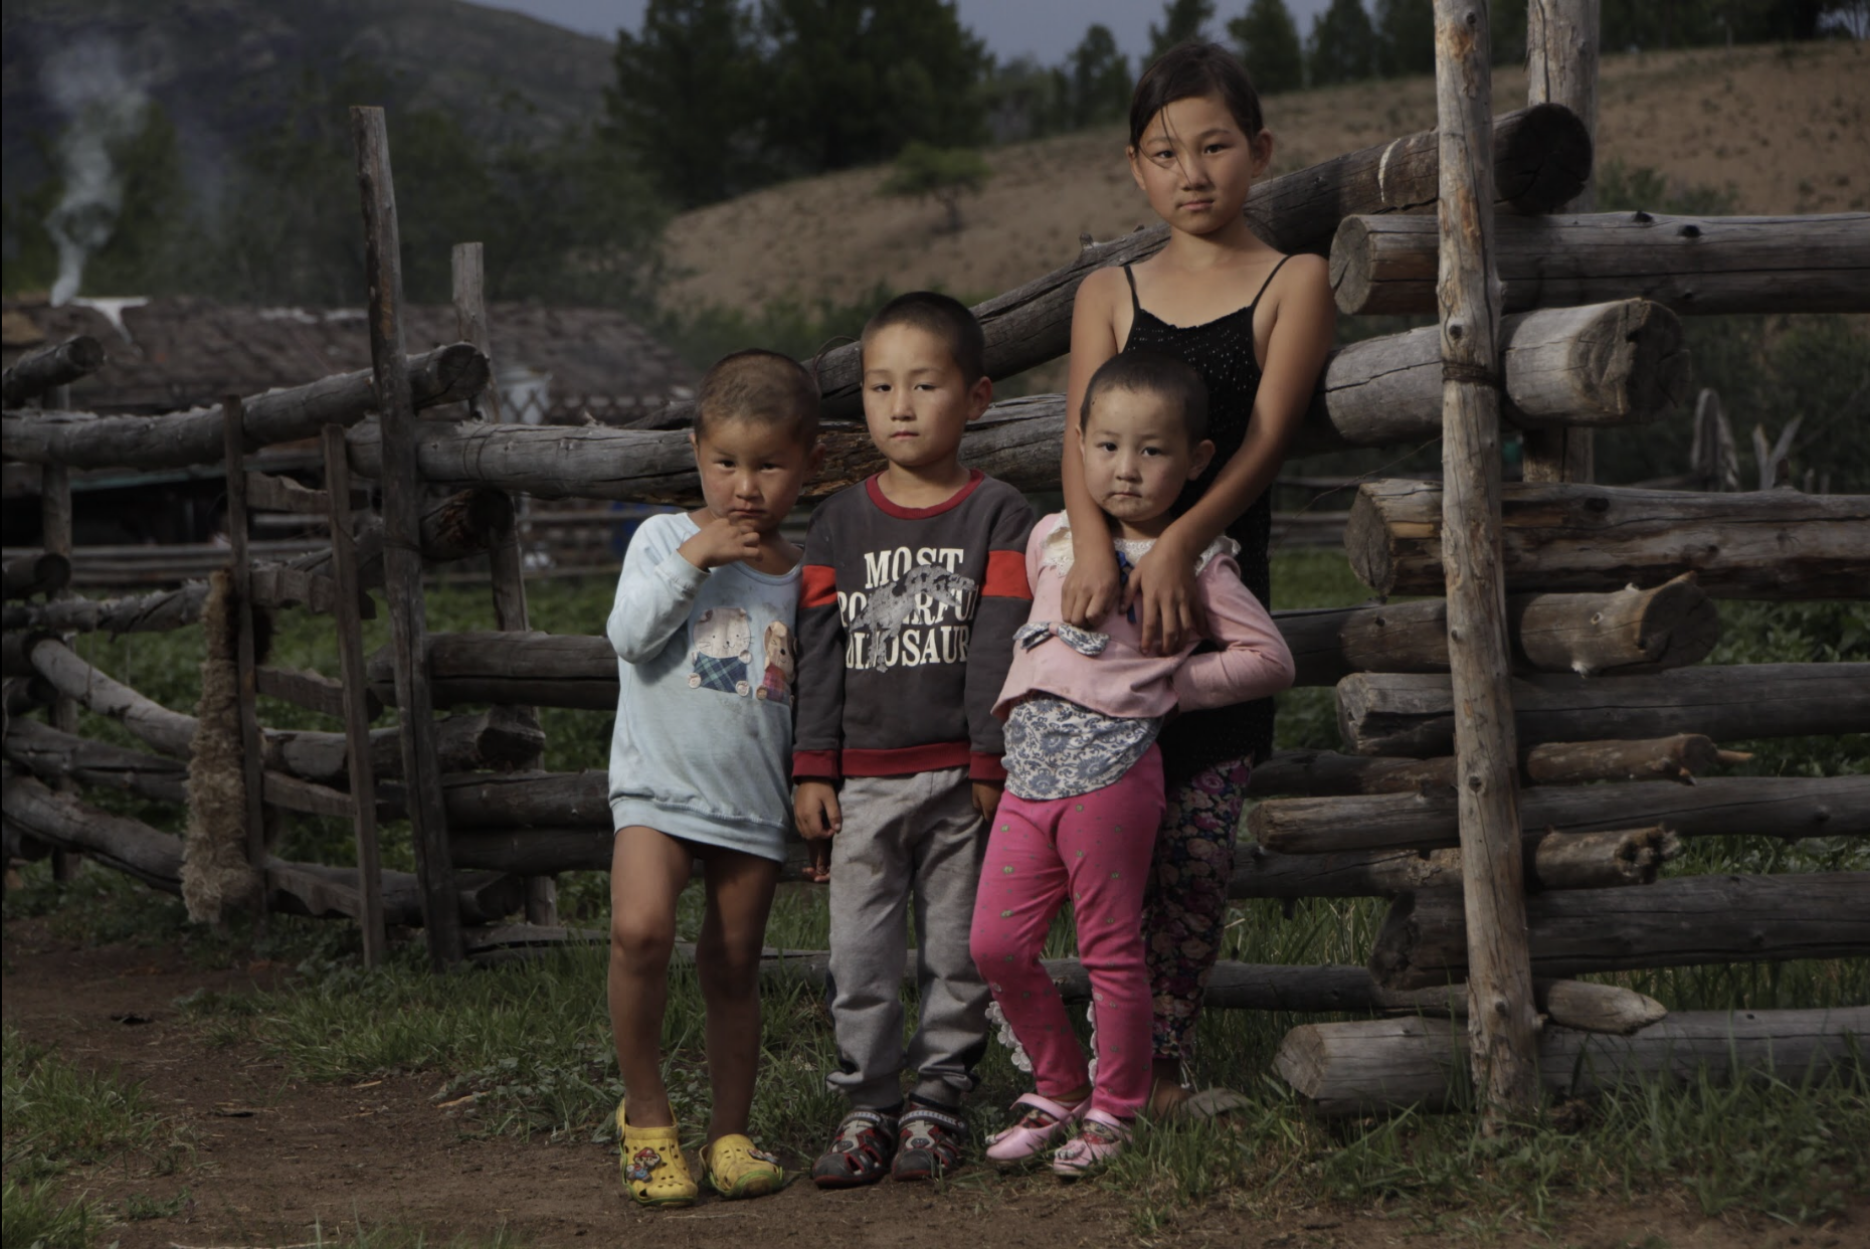 Bulgan province, Mongolia kids portrait photo by Amirdash